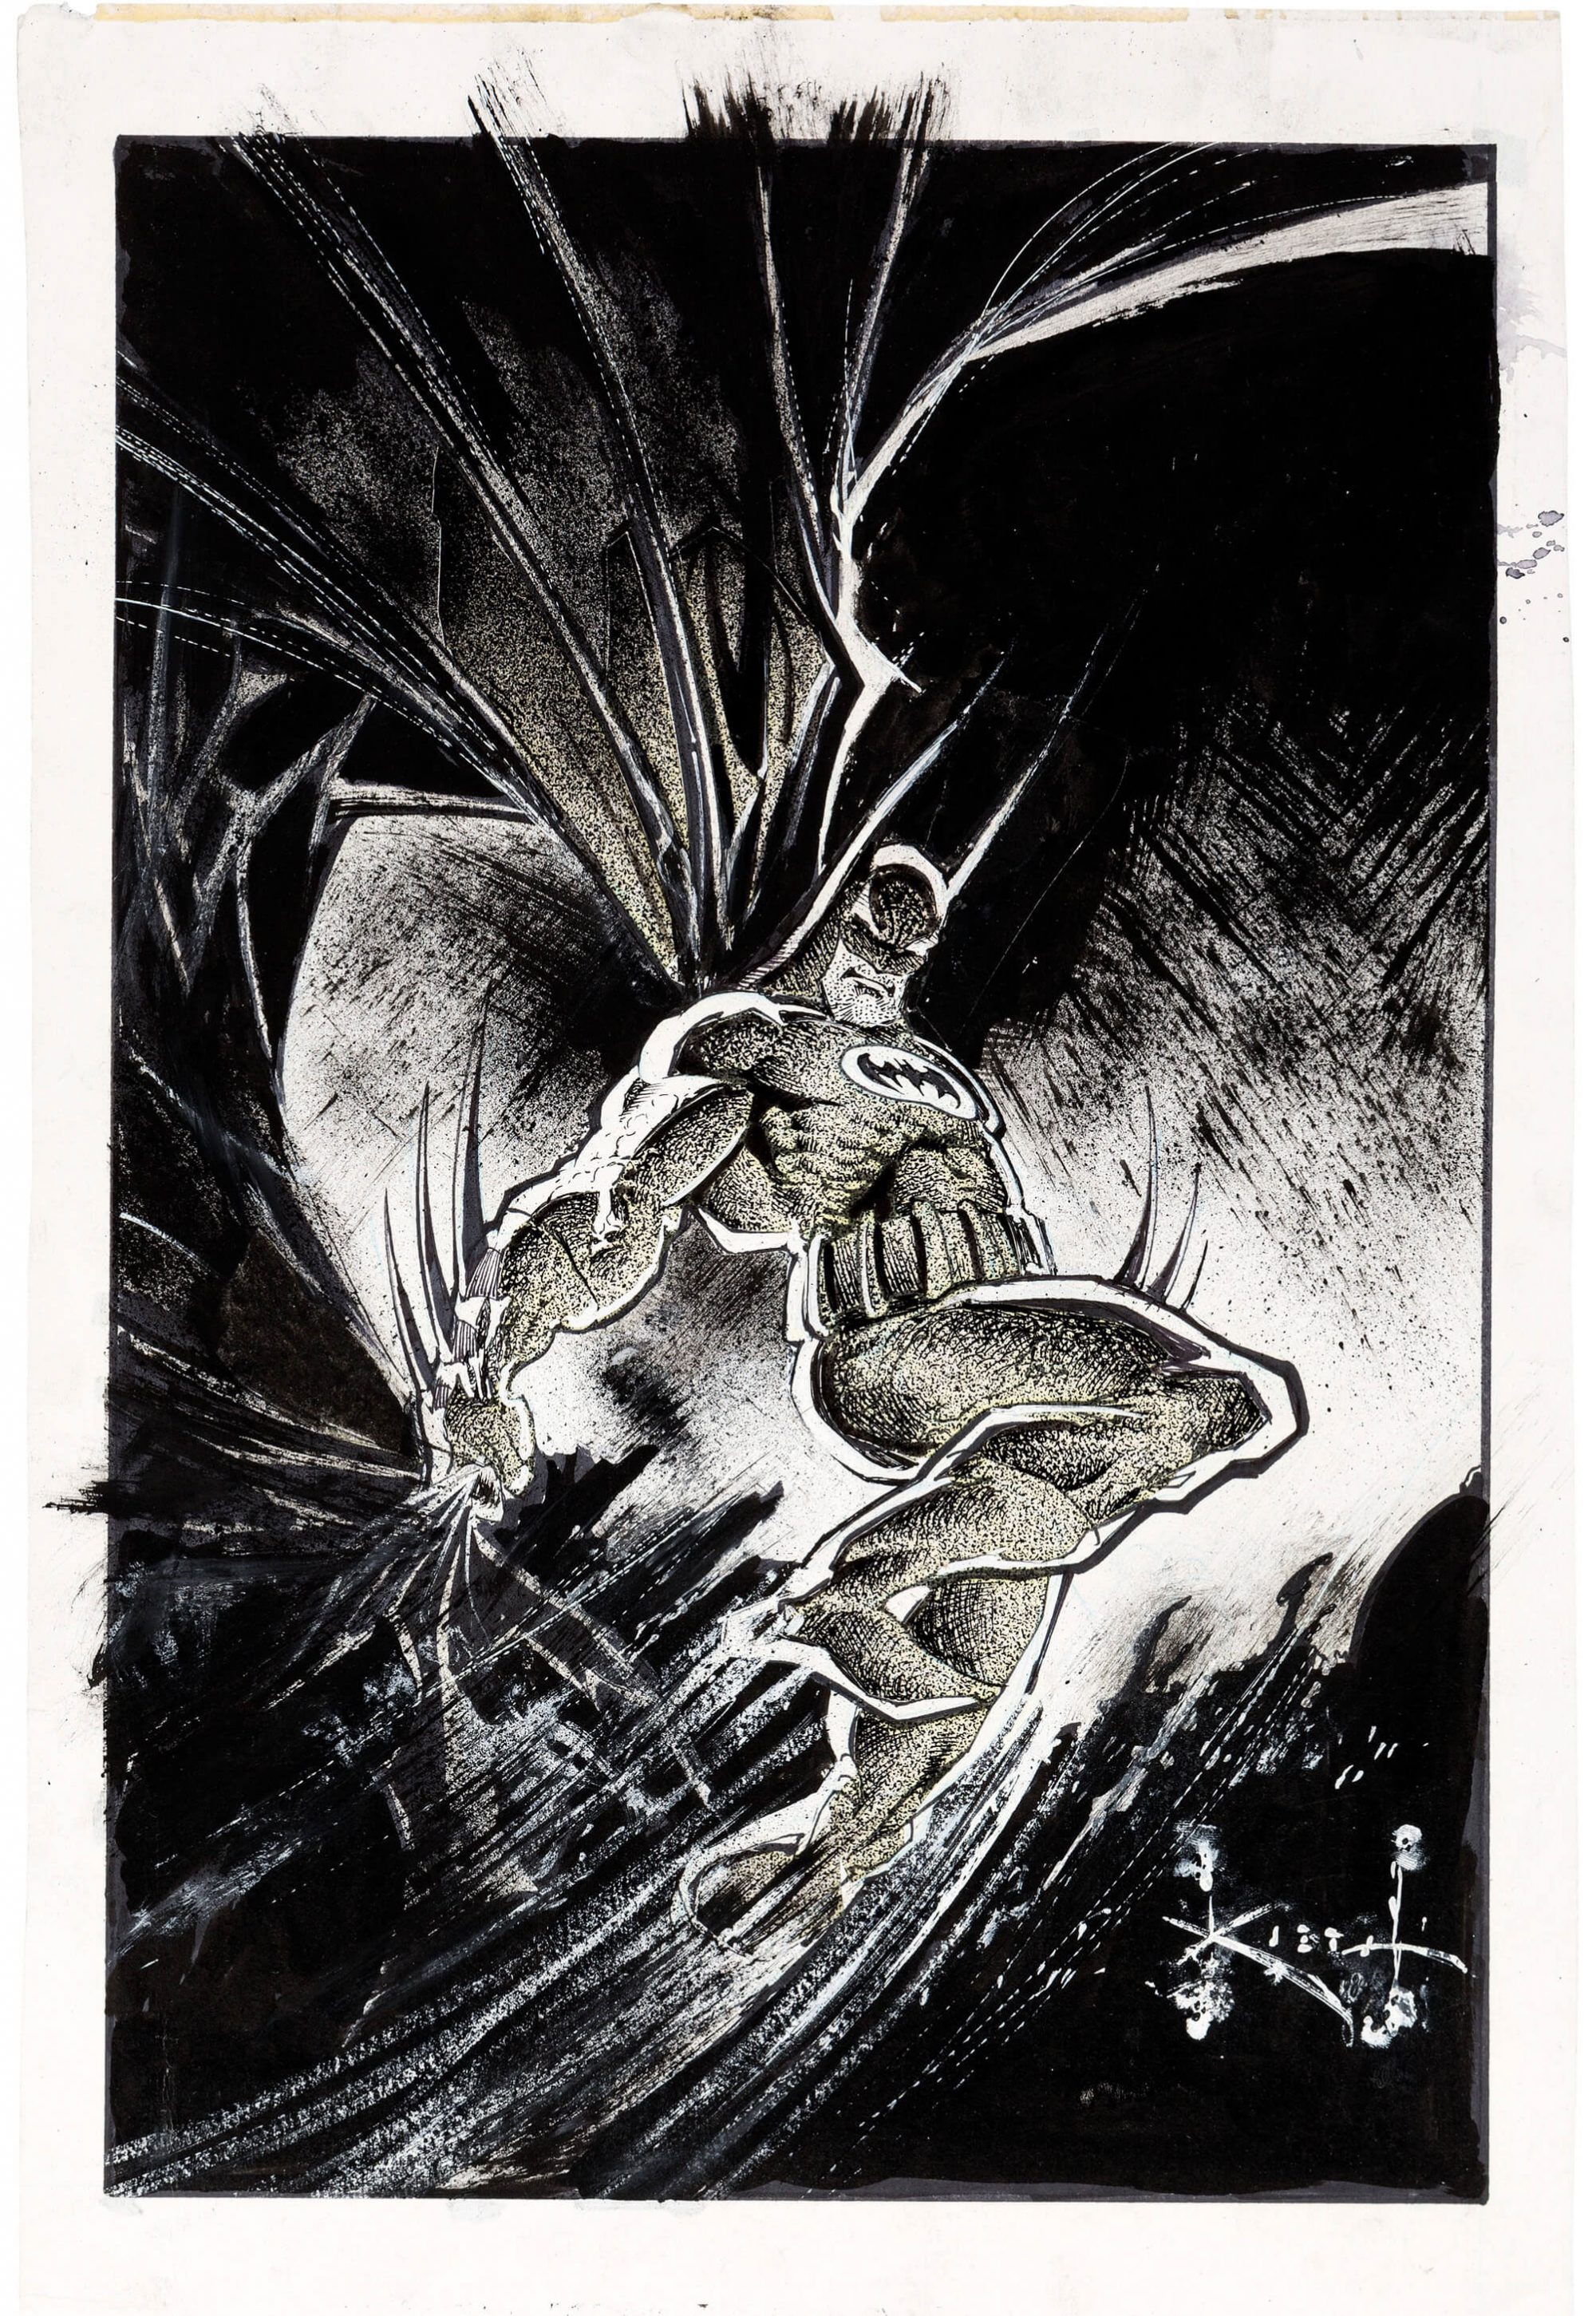 Sam Kieth Batman drawing